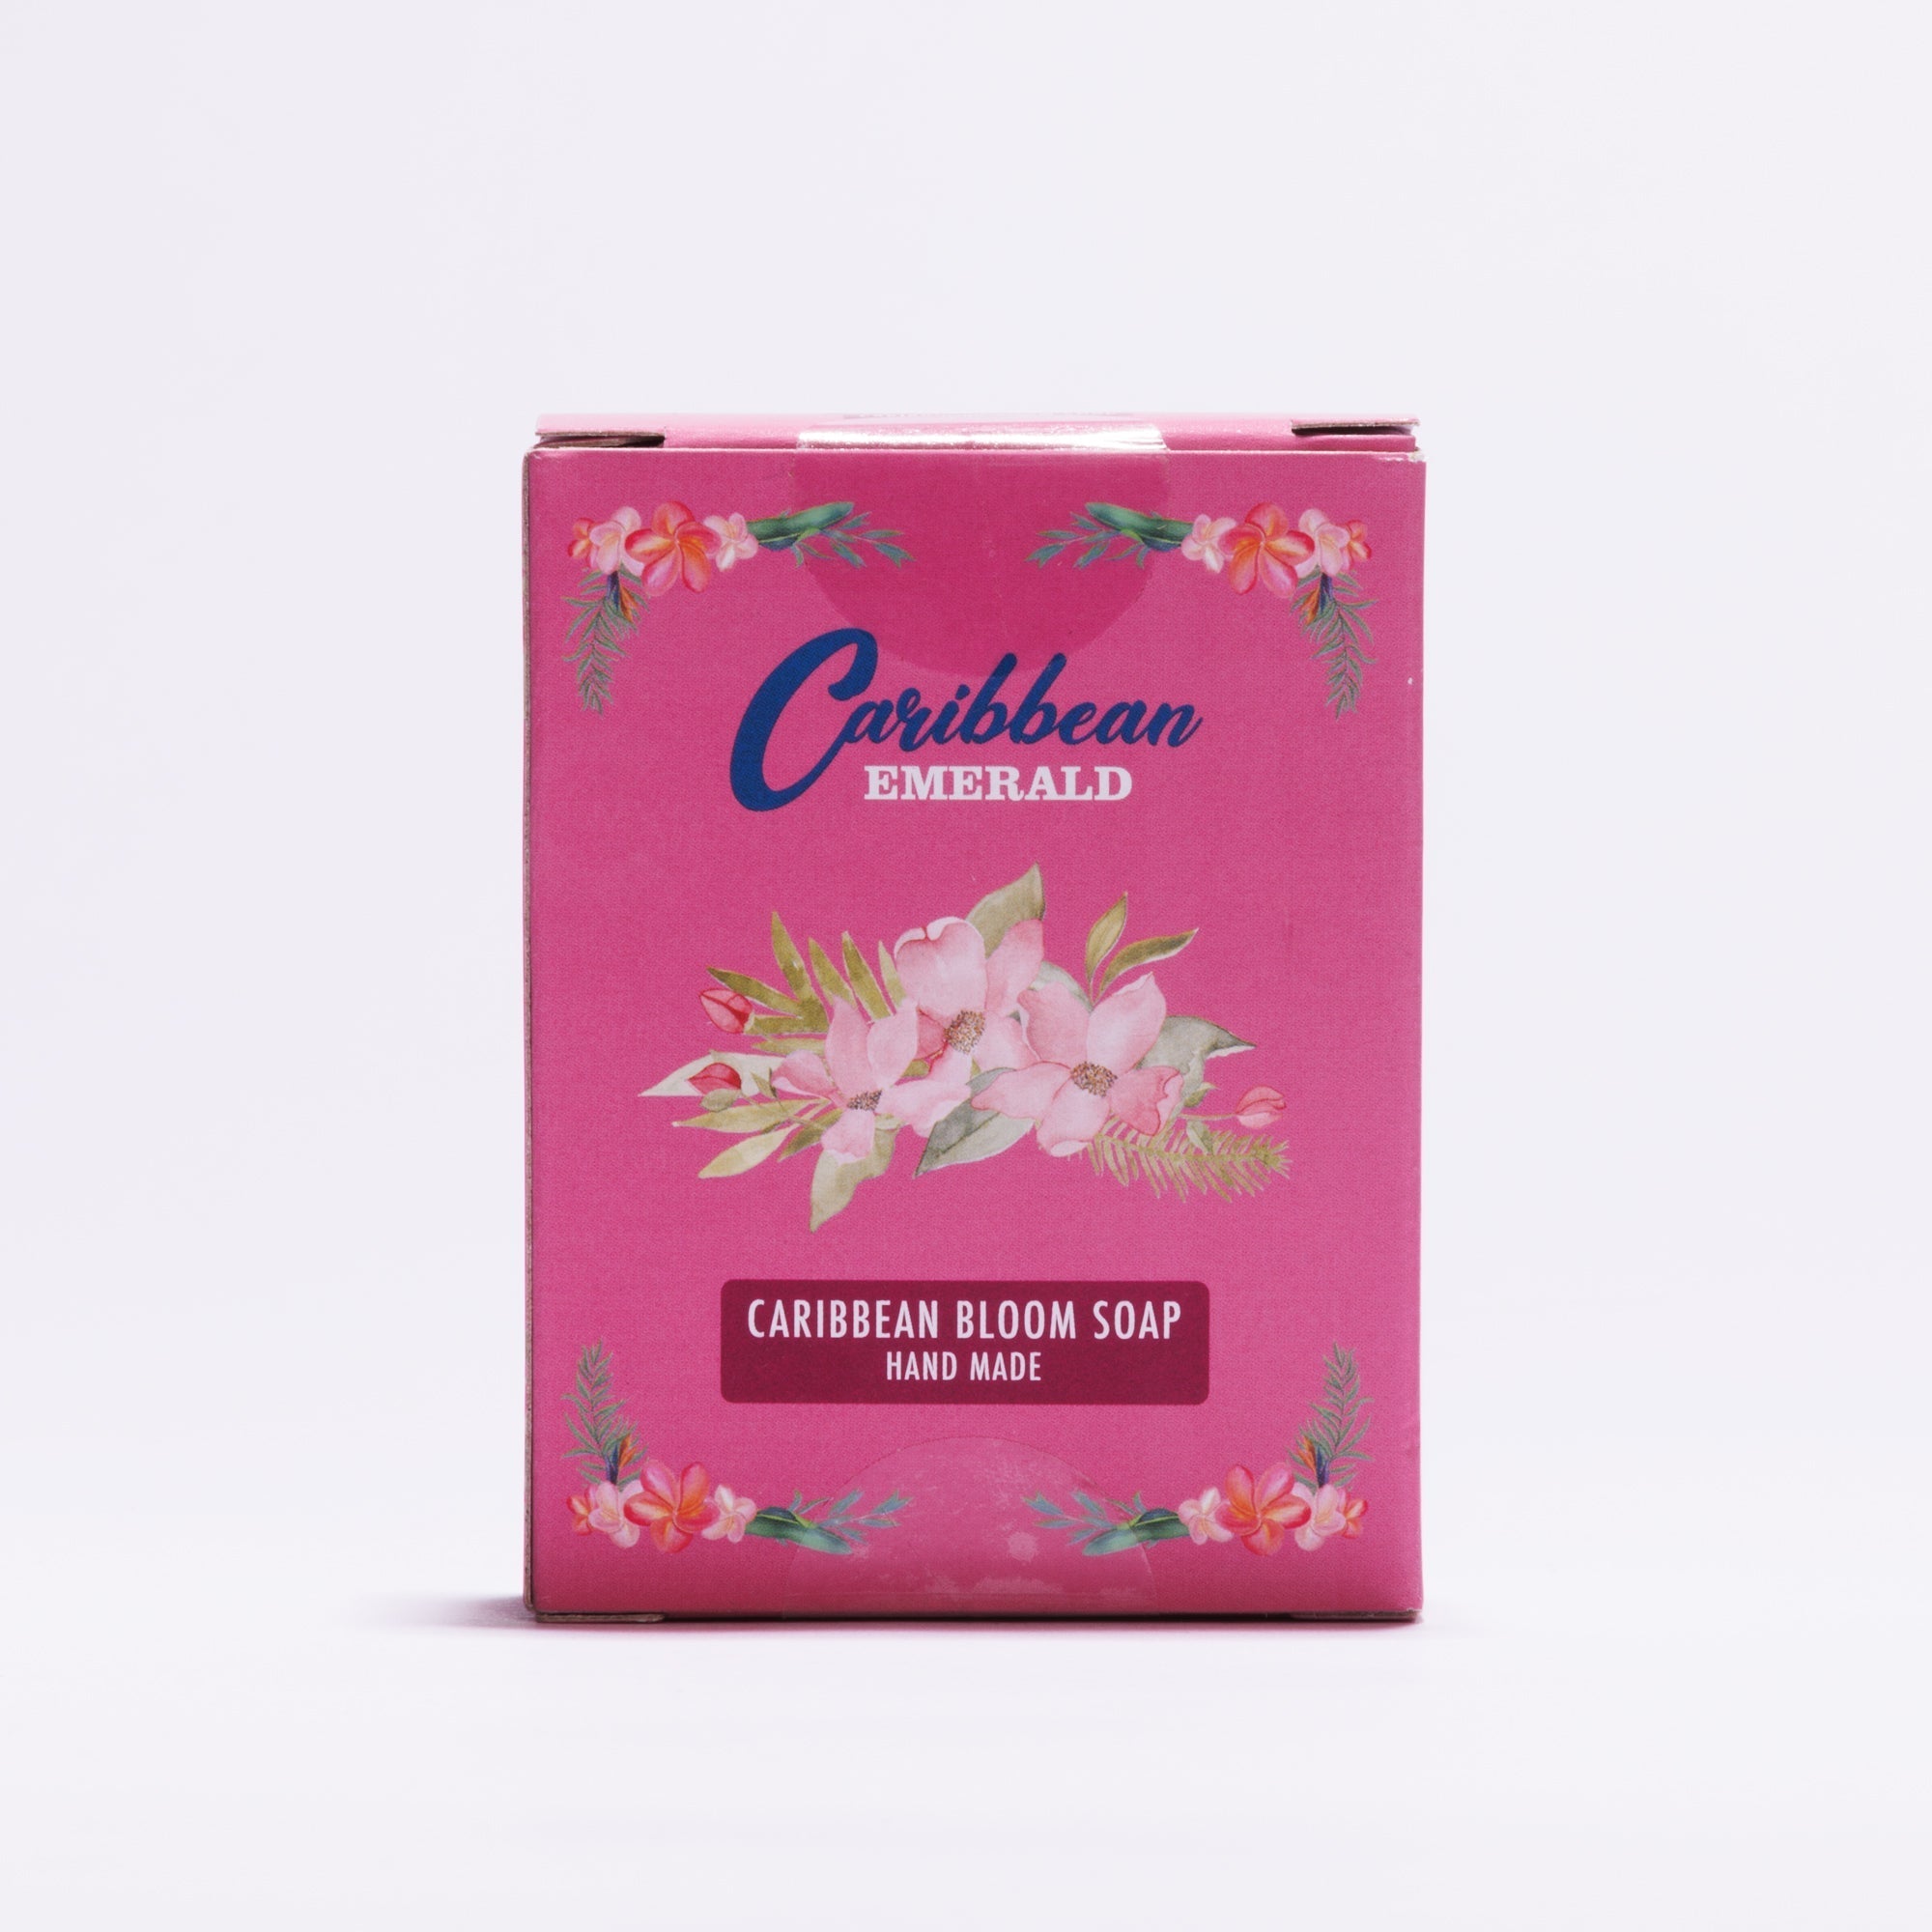 Caribbean bloom soap